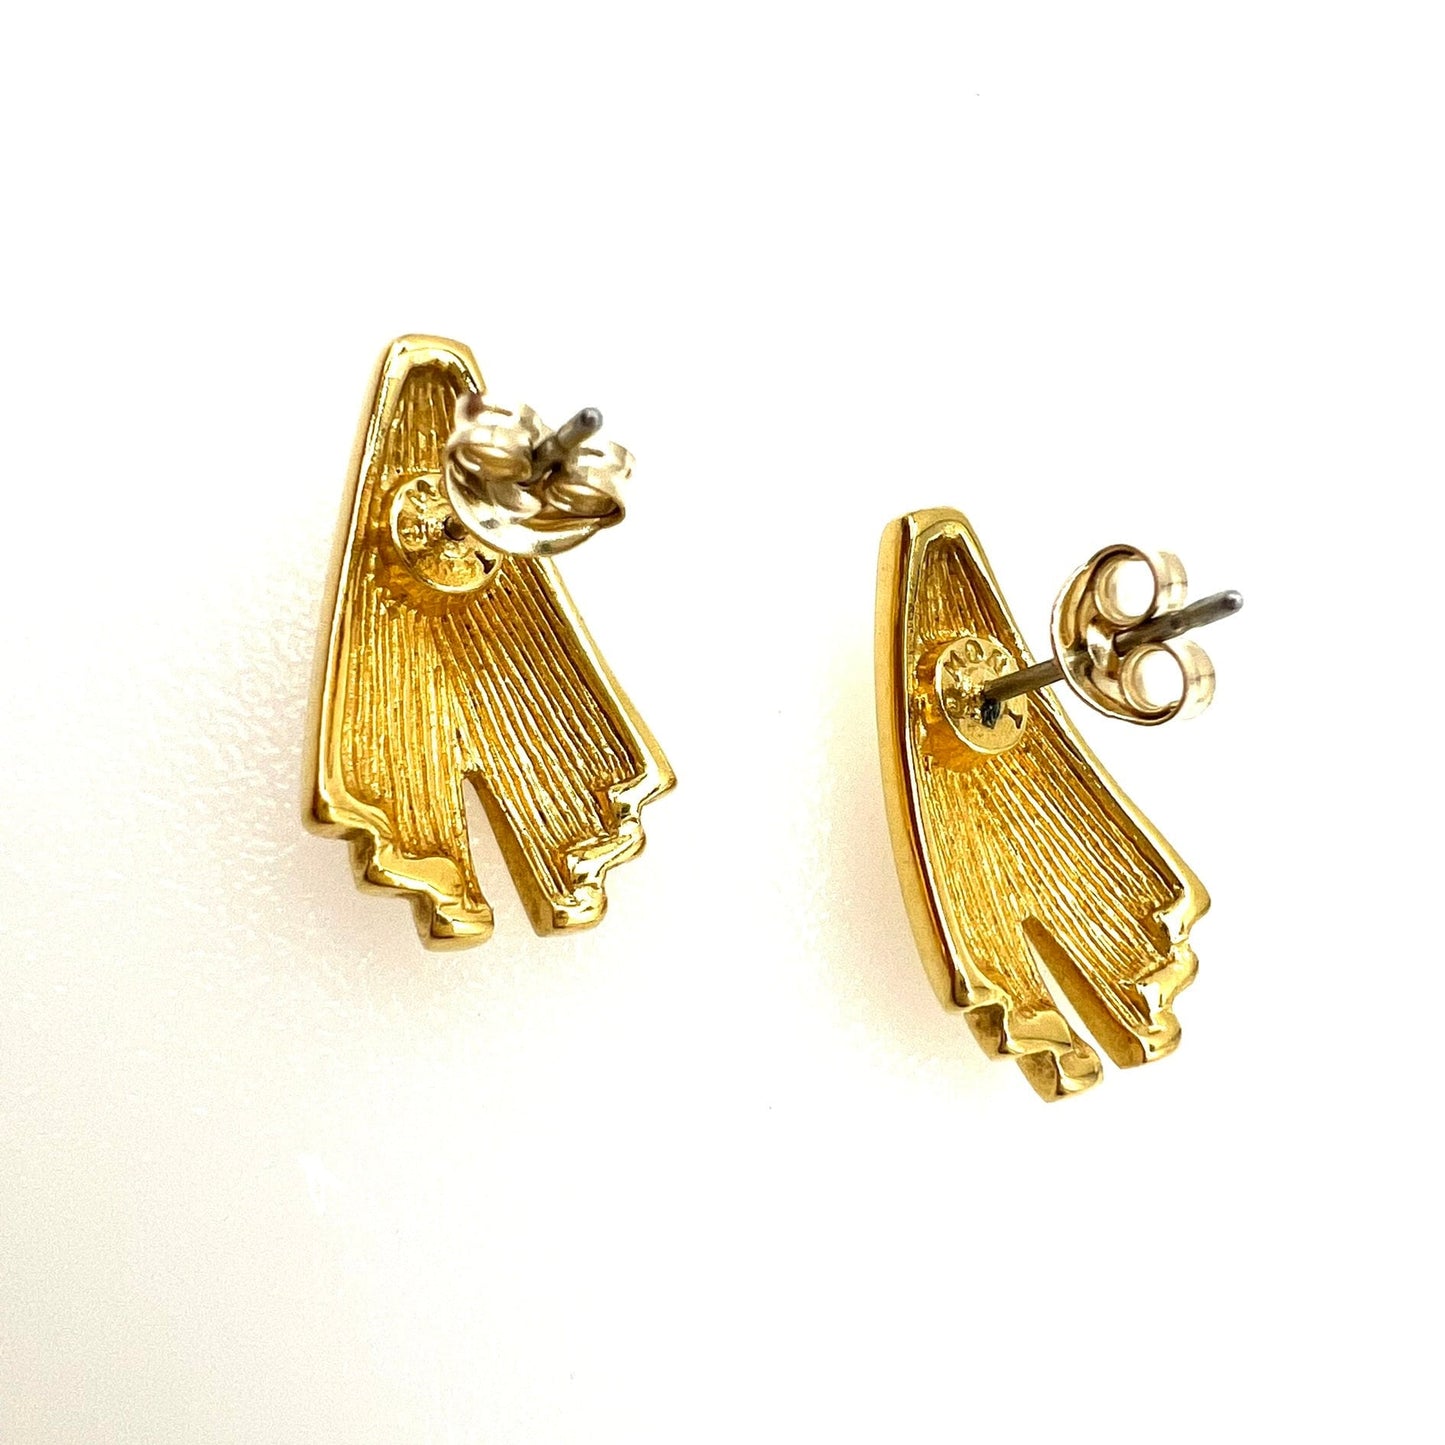 Monet Gold Plated Modernist Ridged Fan Pierced Earrings with (Brand New) 14K Gold Filled Butterfly Backs